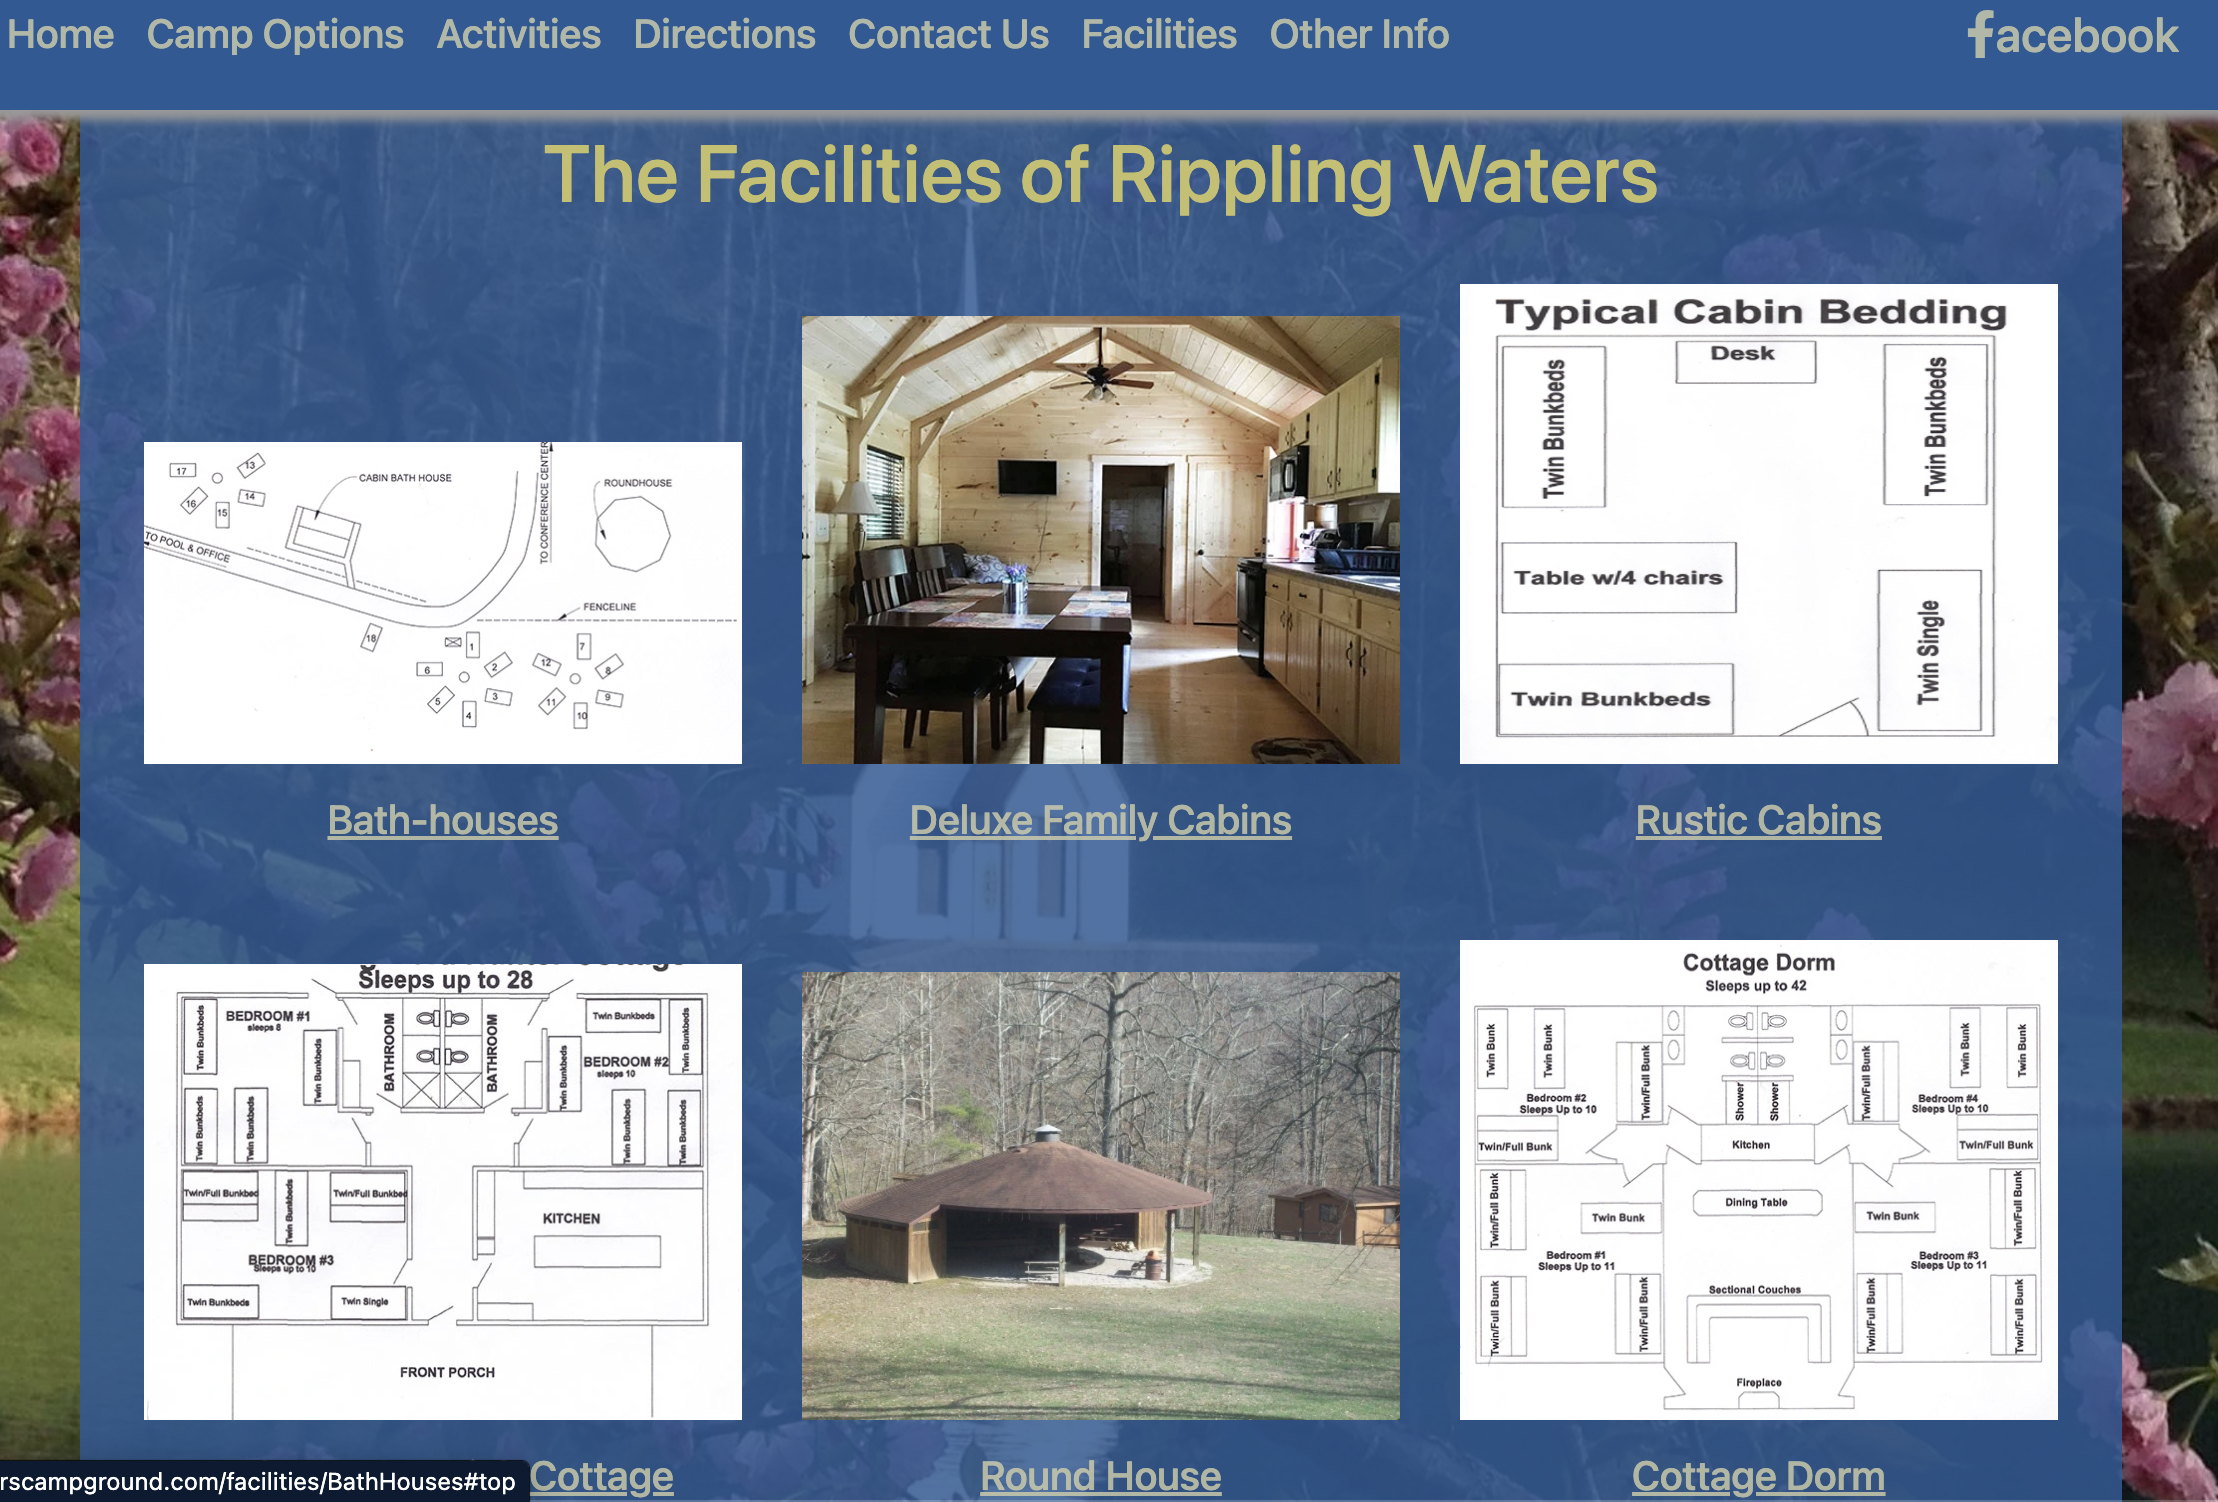 /static/rippling_waters/facilities.png